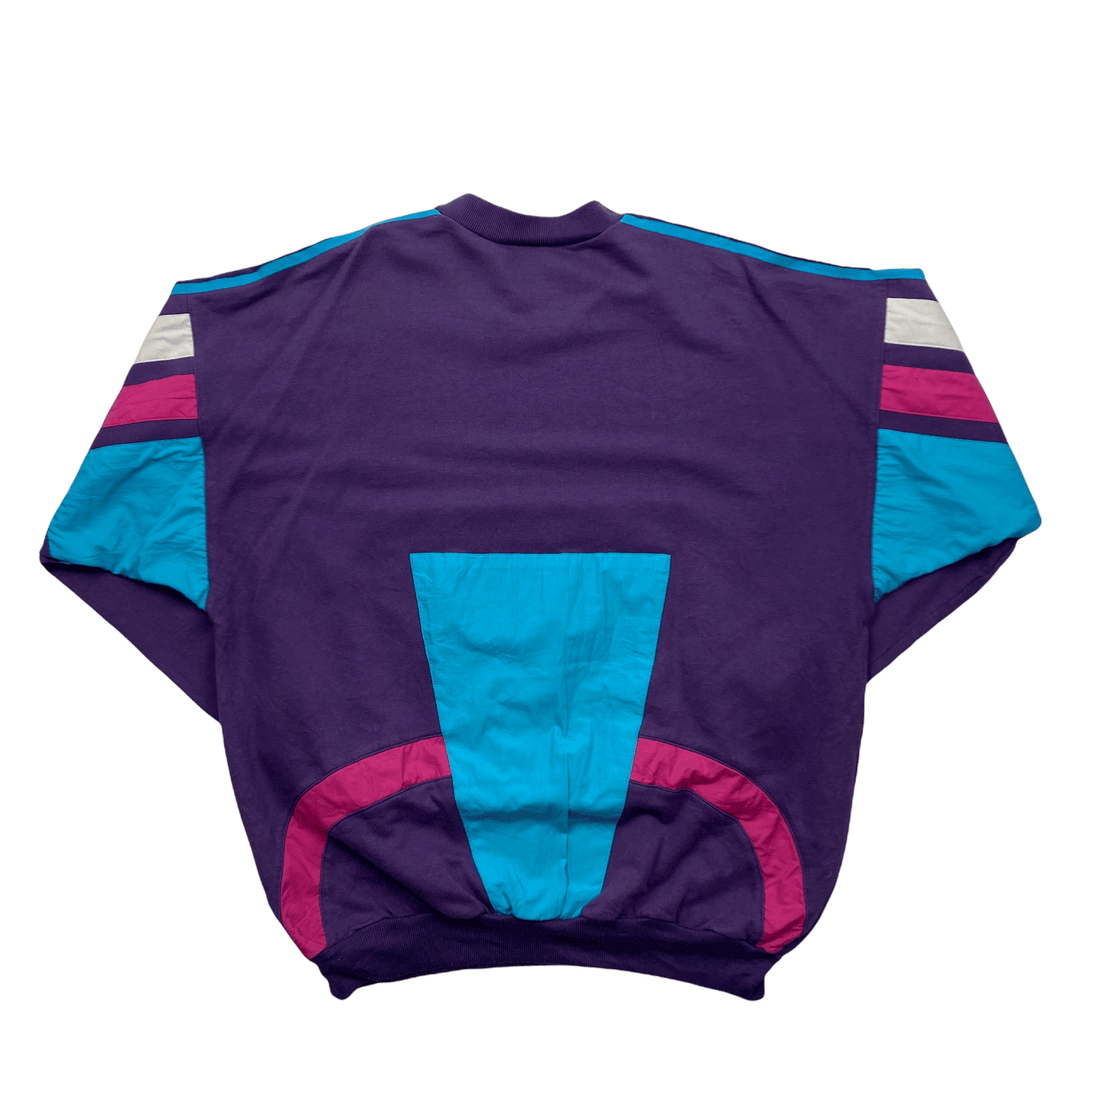 Vintage 90s Purple, Blue + White Adidas Spell-Out Sweatshirt - Large - The Streetwear Studio